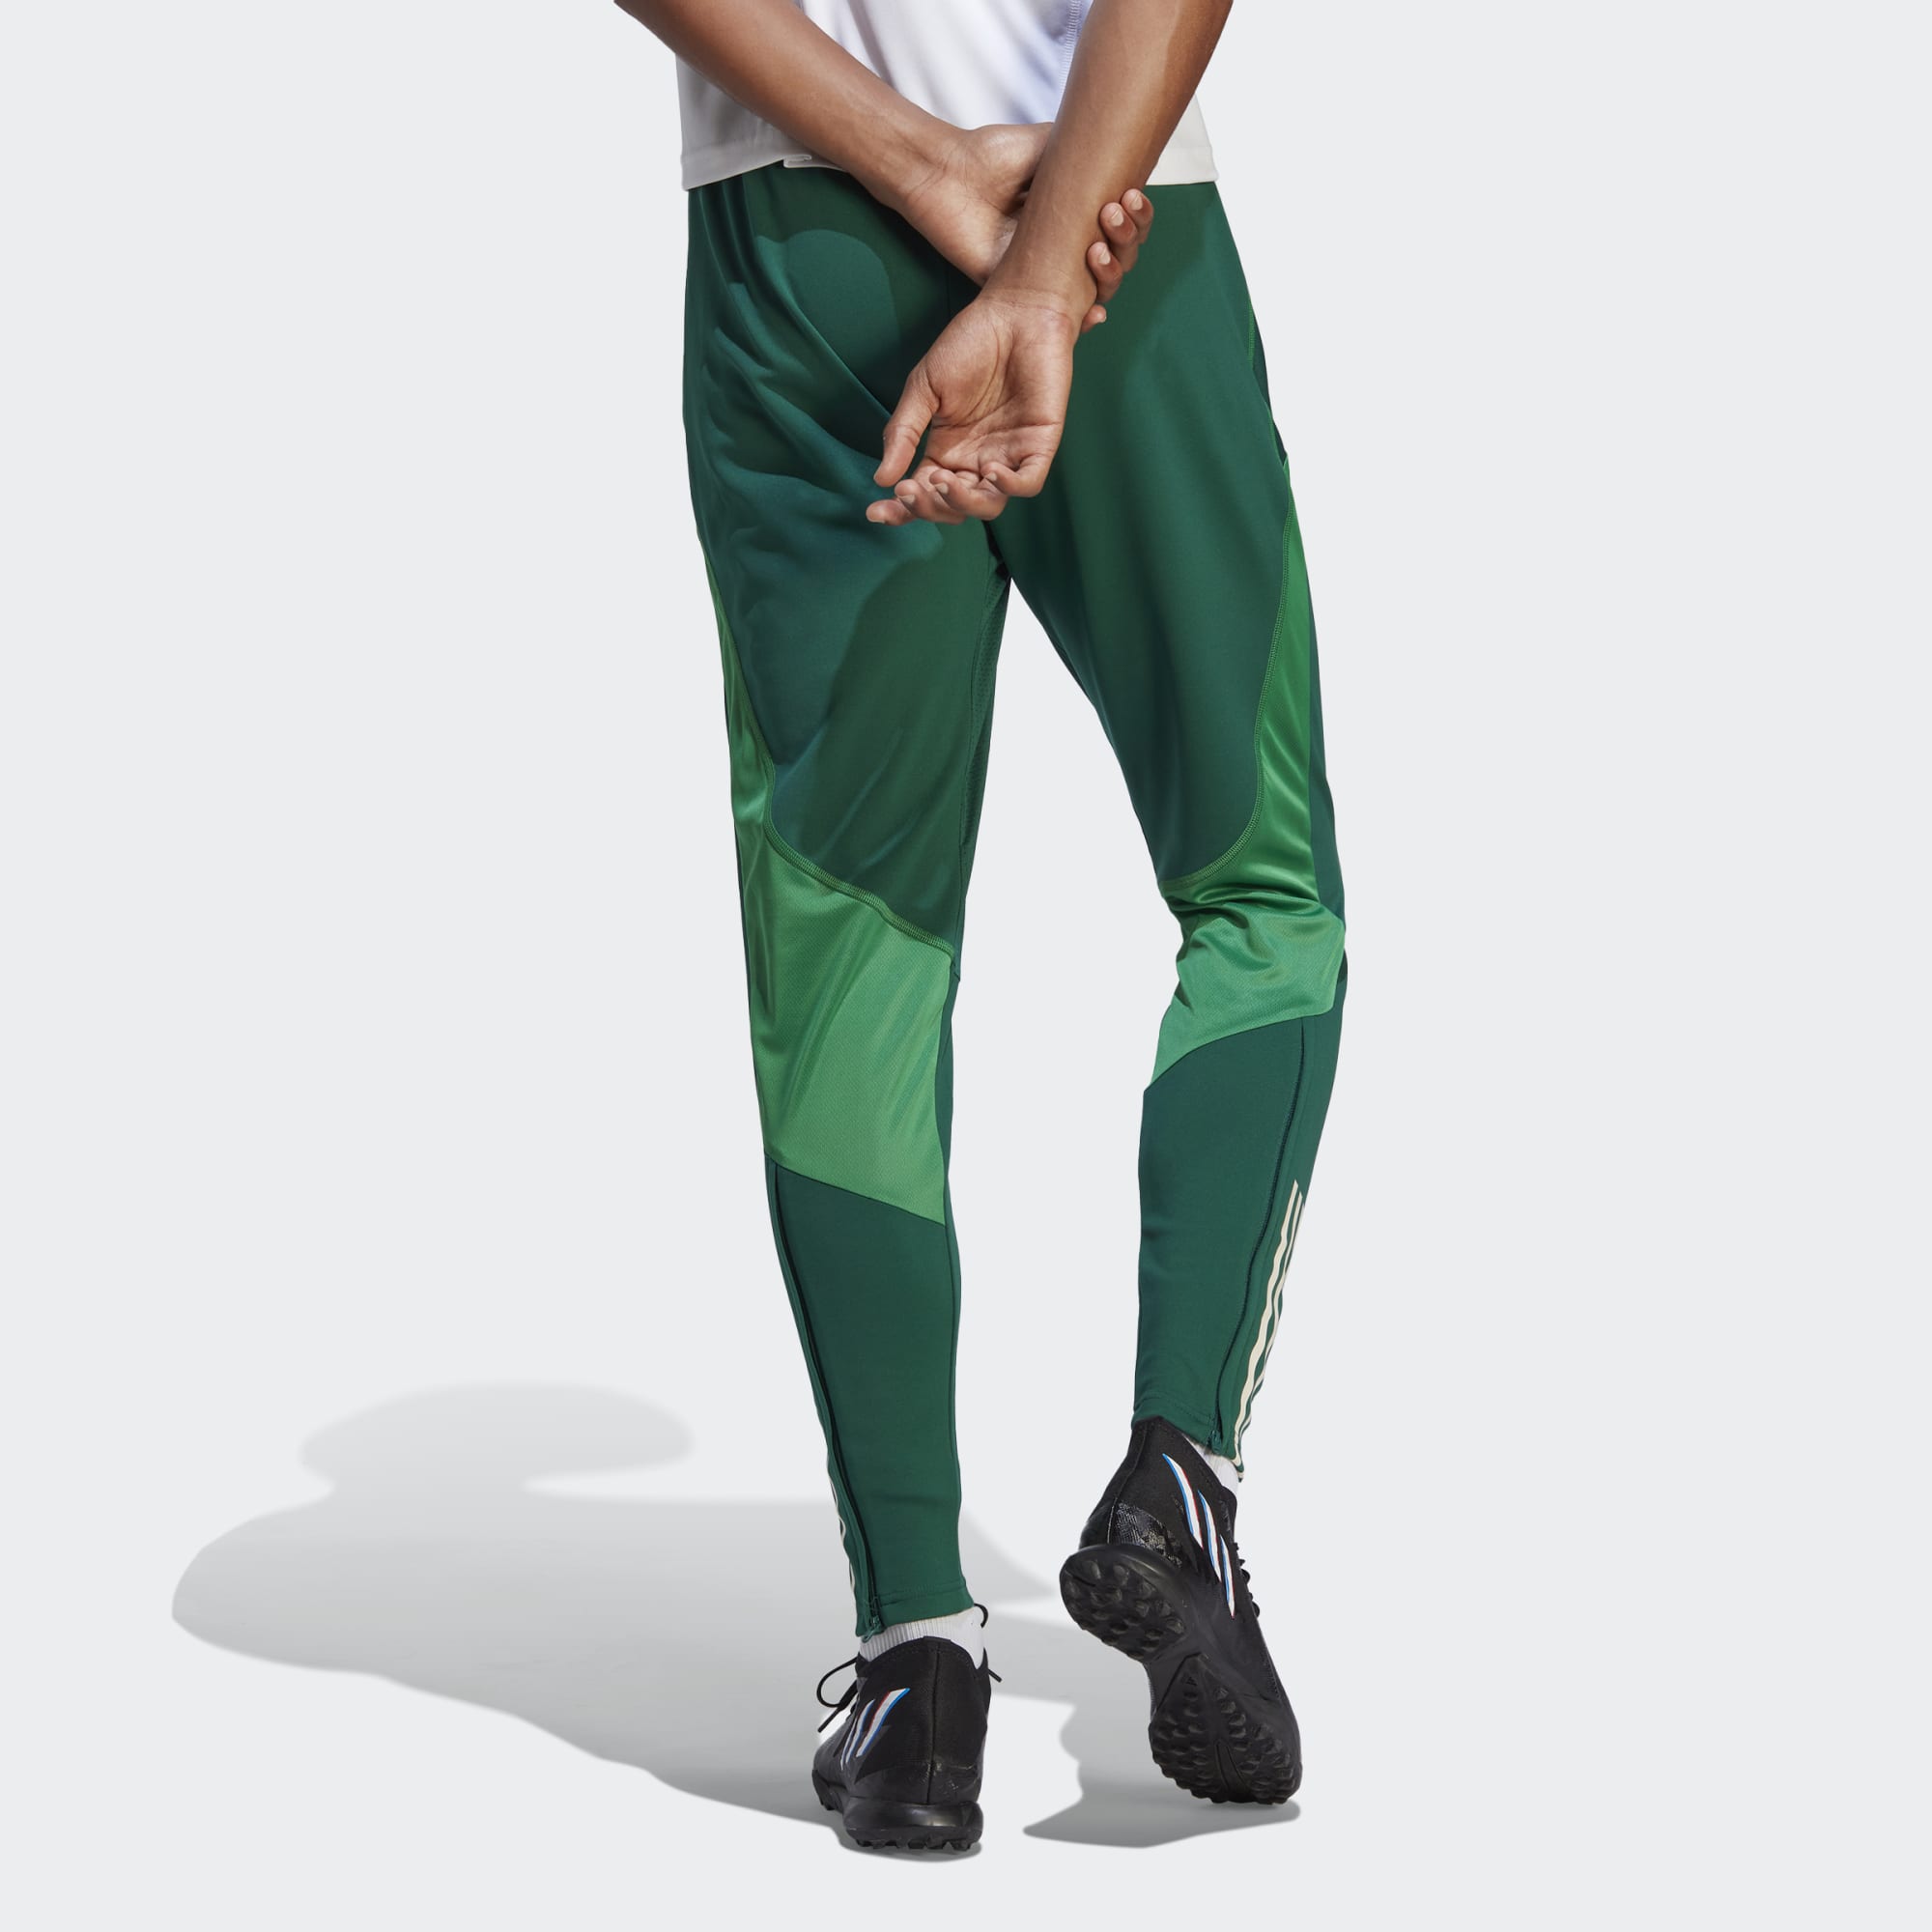 Adidas Mens Workout Pants in Mens Activewear - Walmart.com